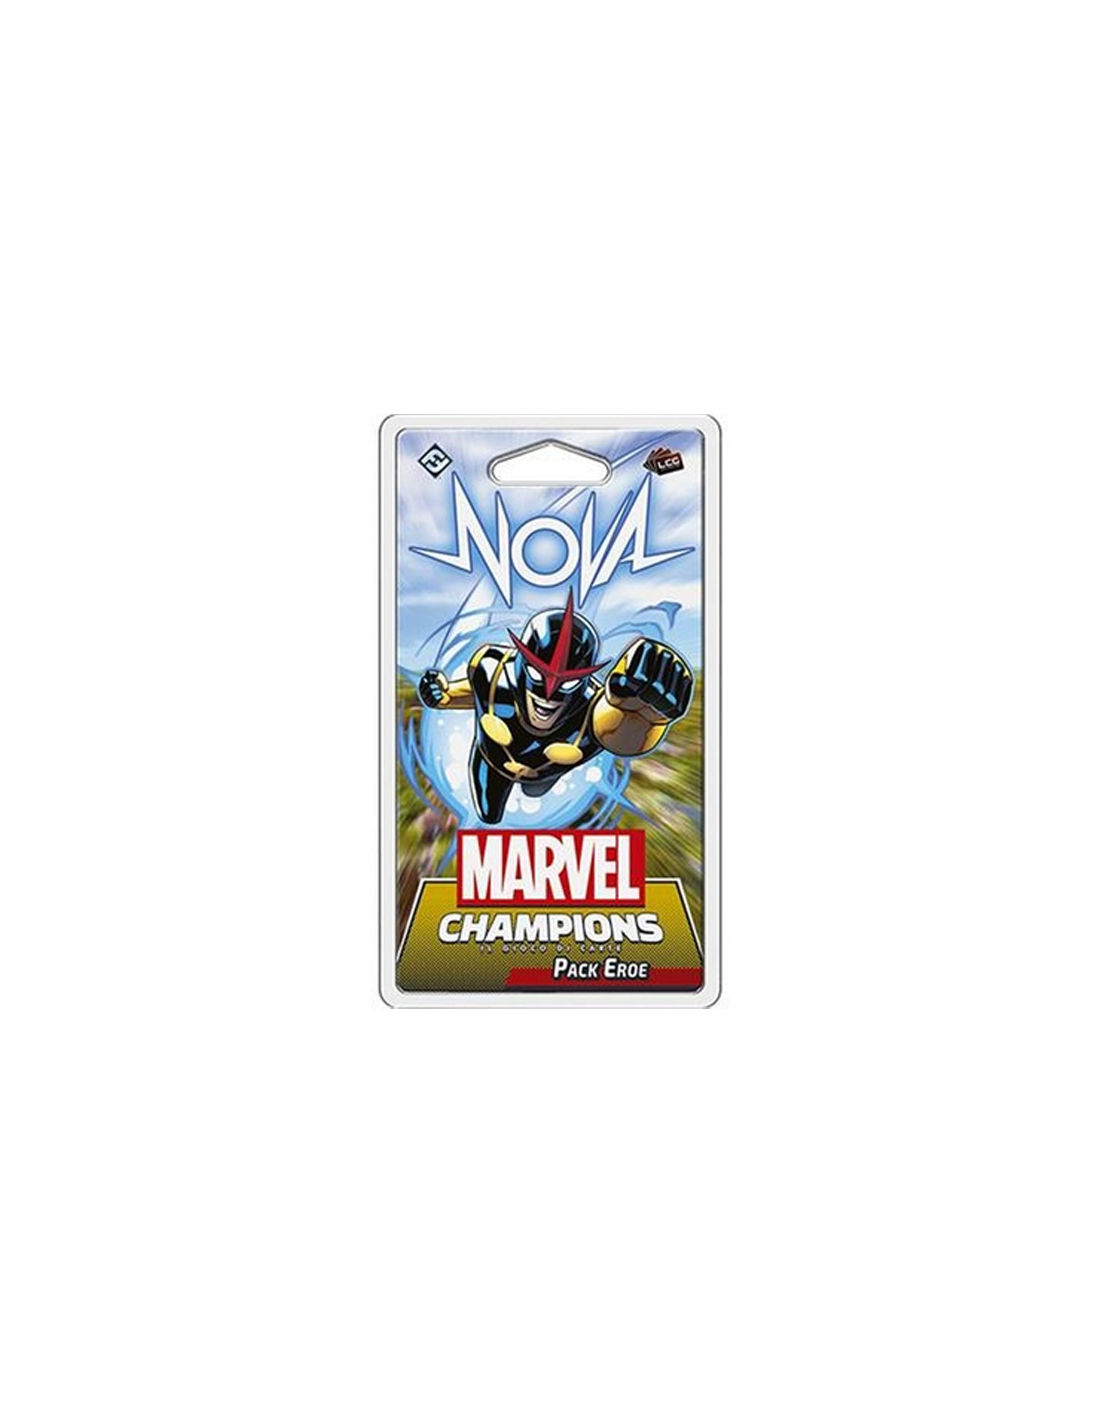 Marvel Champions LCG - Nova - Pack Eroe (ITA)